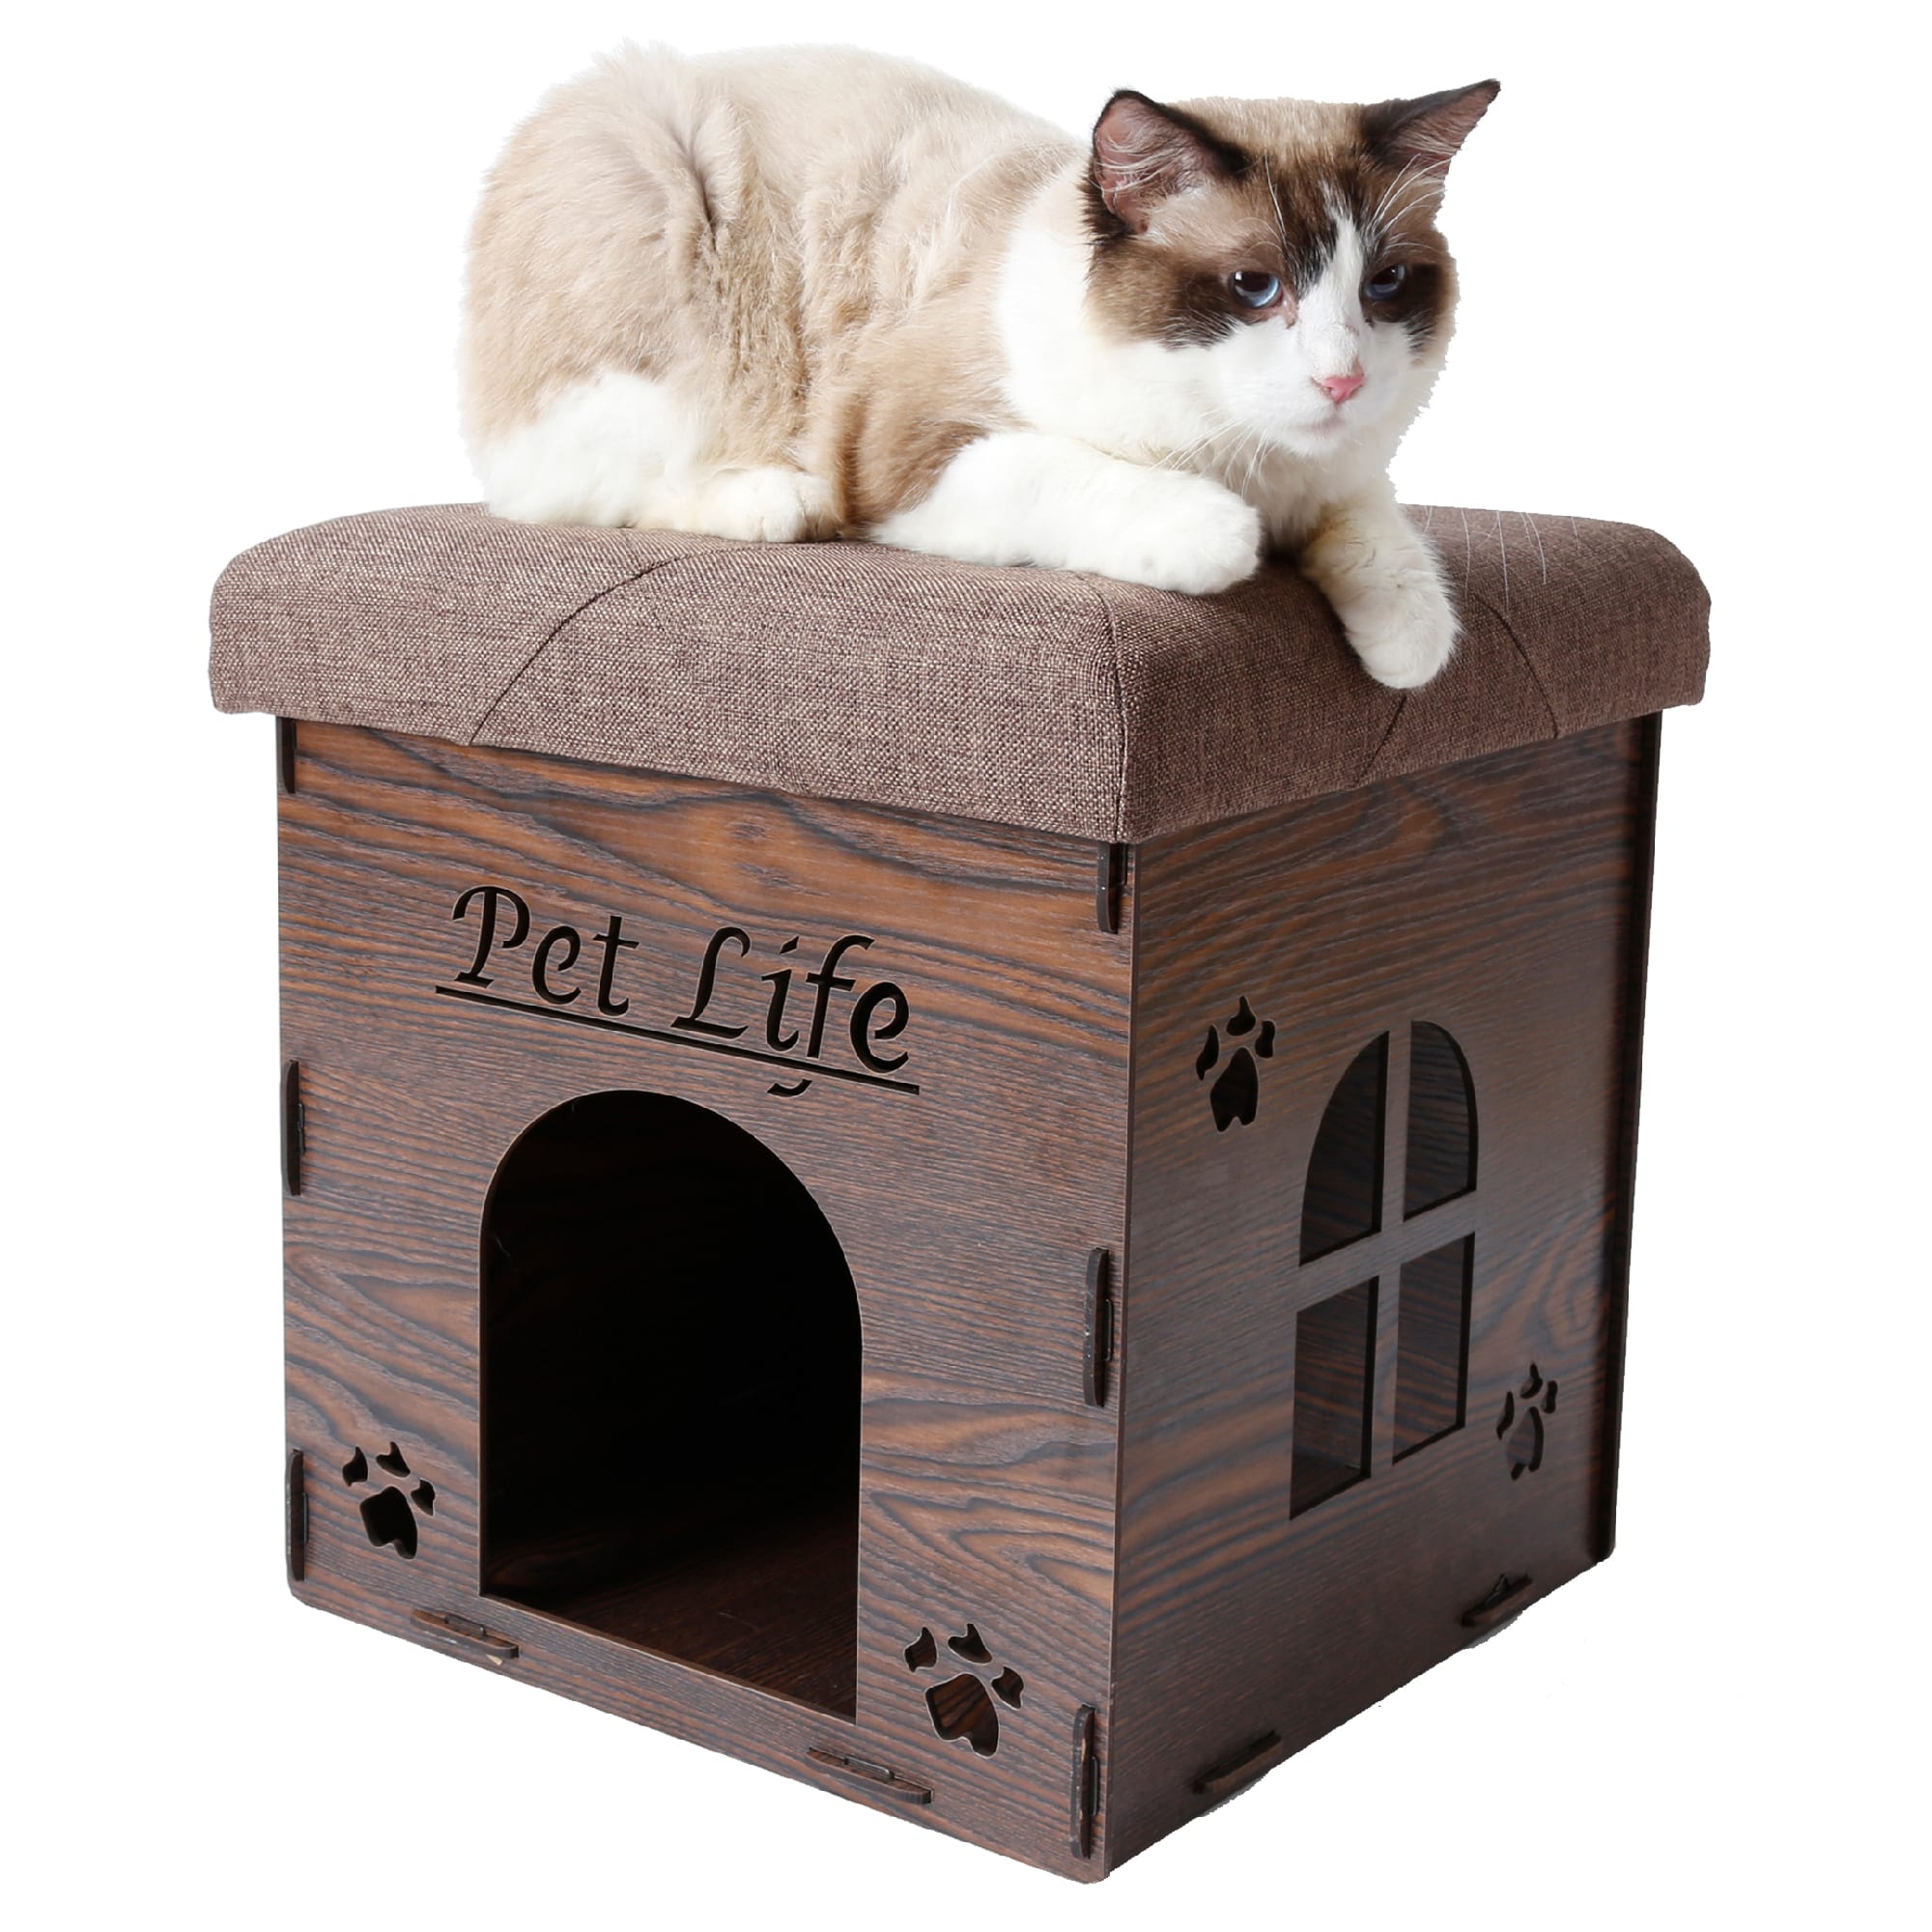 Photos - Cat Bed / House Pet Life Brown Foldaway Collapsible Designer Cat House Furniture 